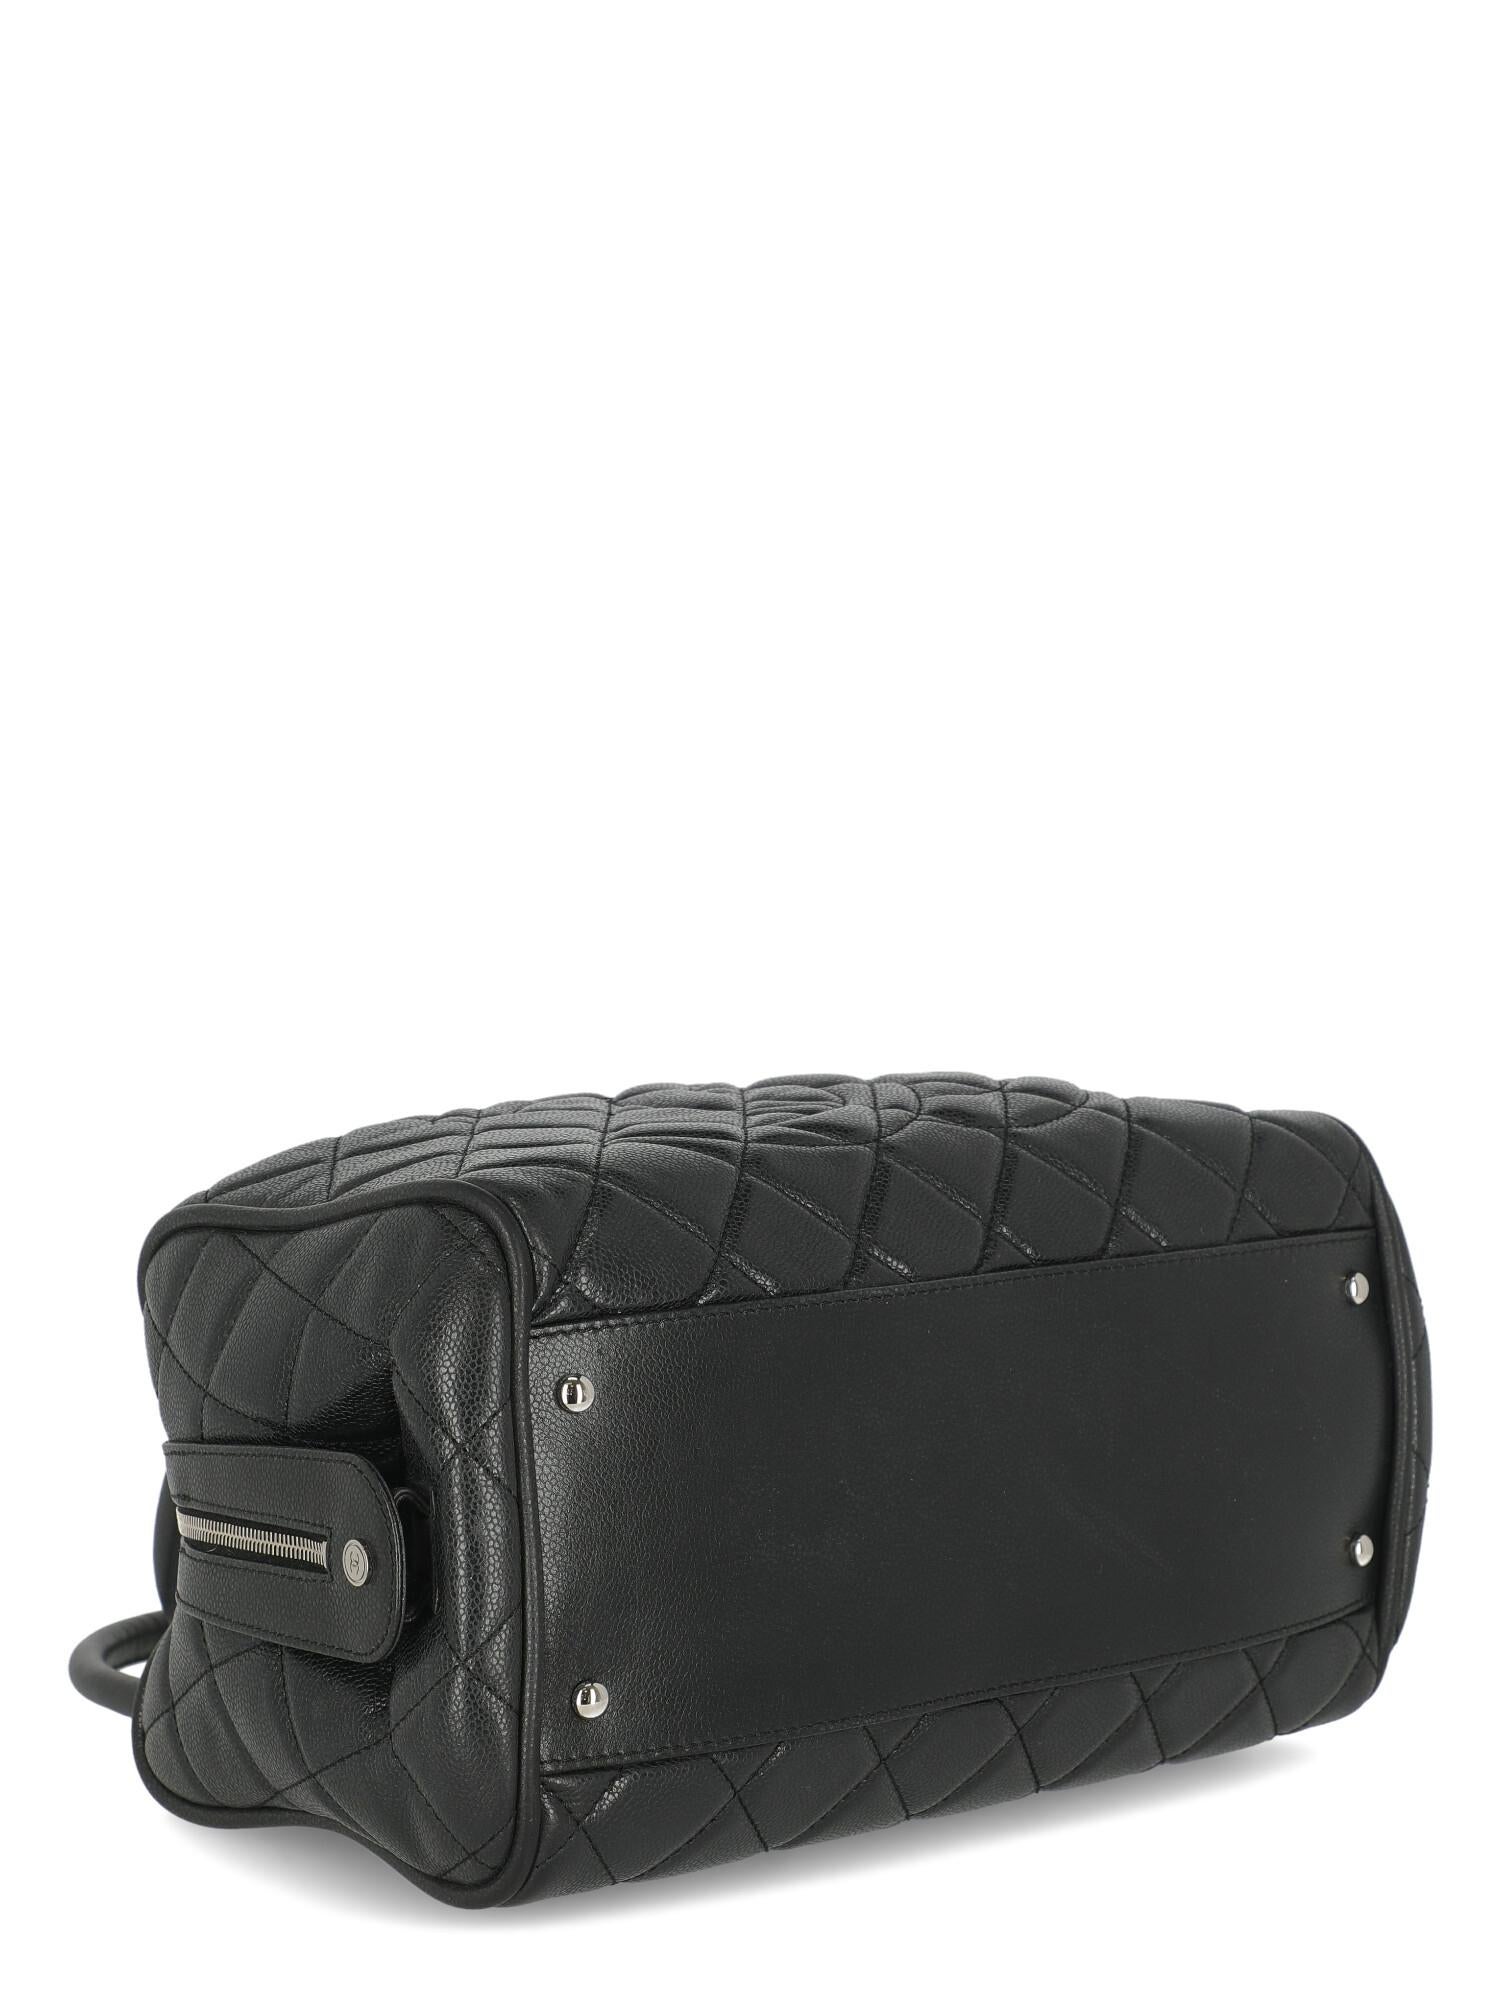 Chanel Women's Handbag Black Leather 2